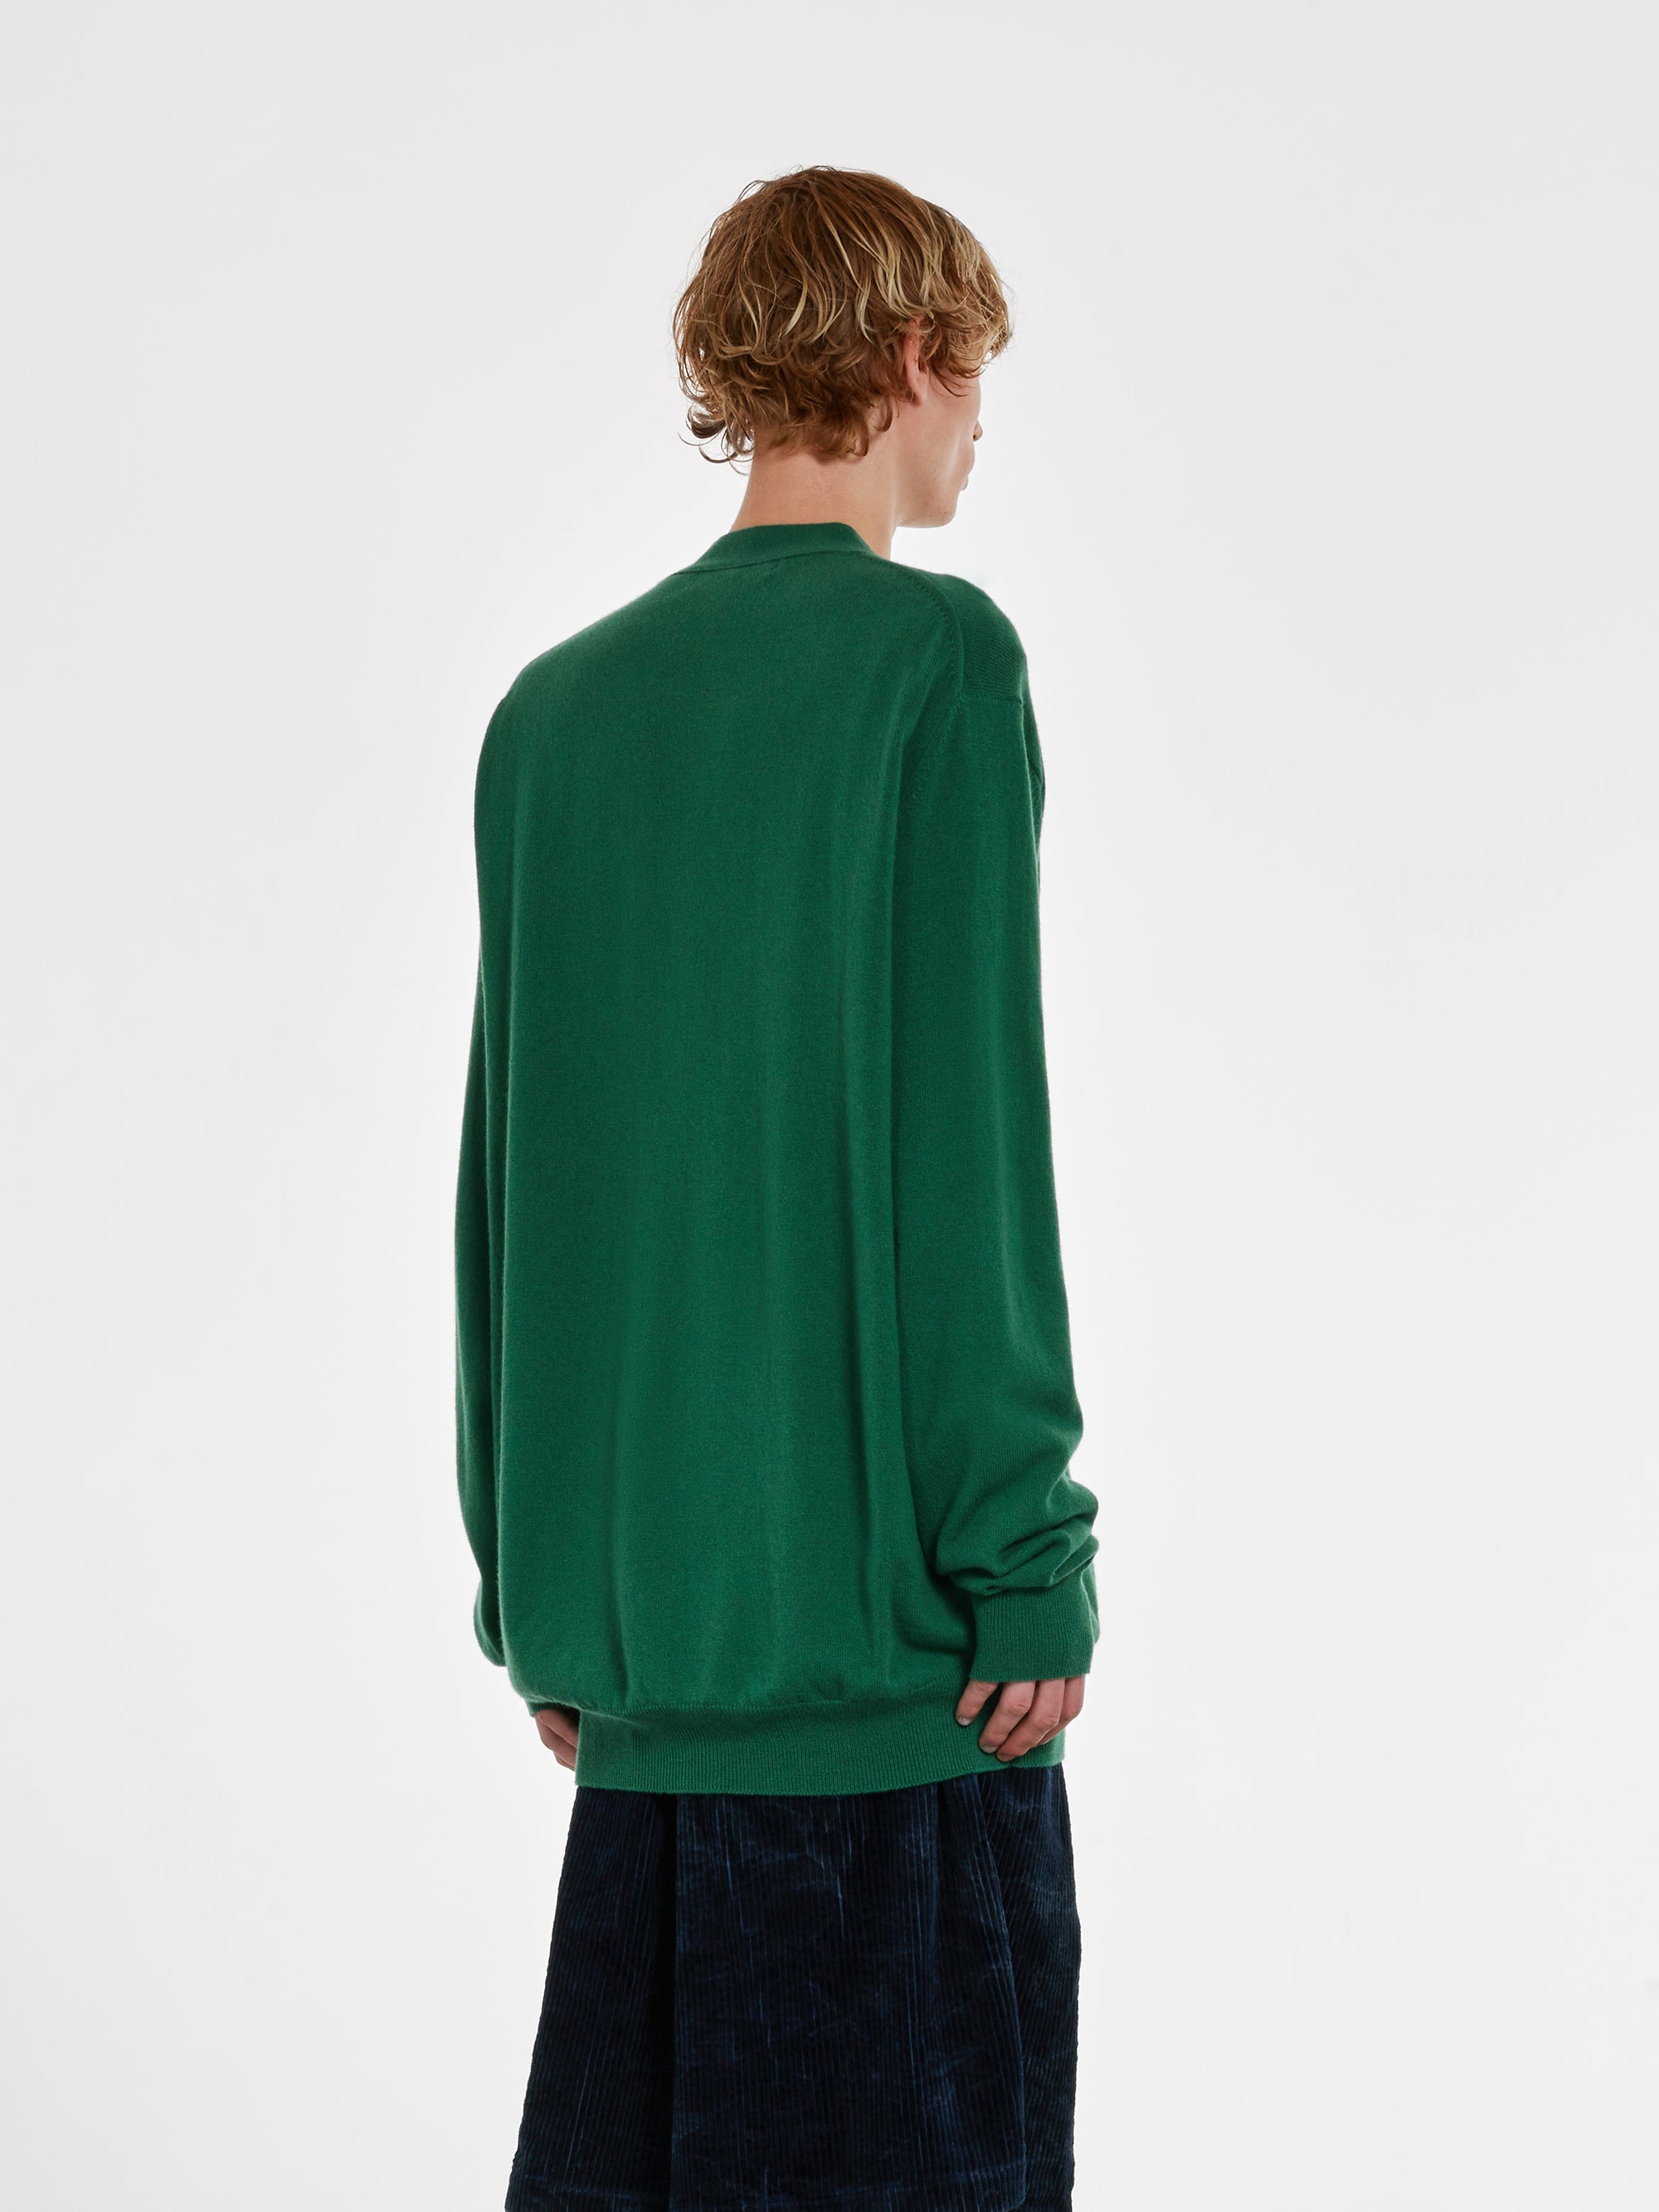 CDG Shirt - Men's Wool Cardigan - (Green) view 3